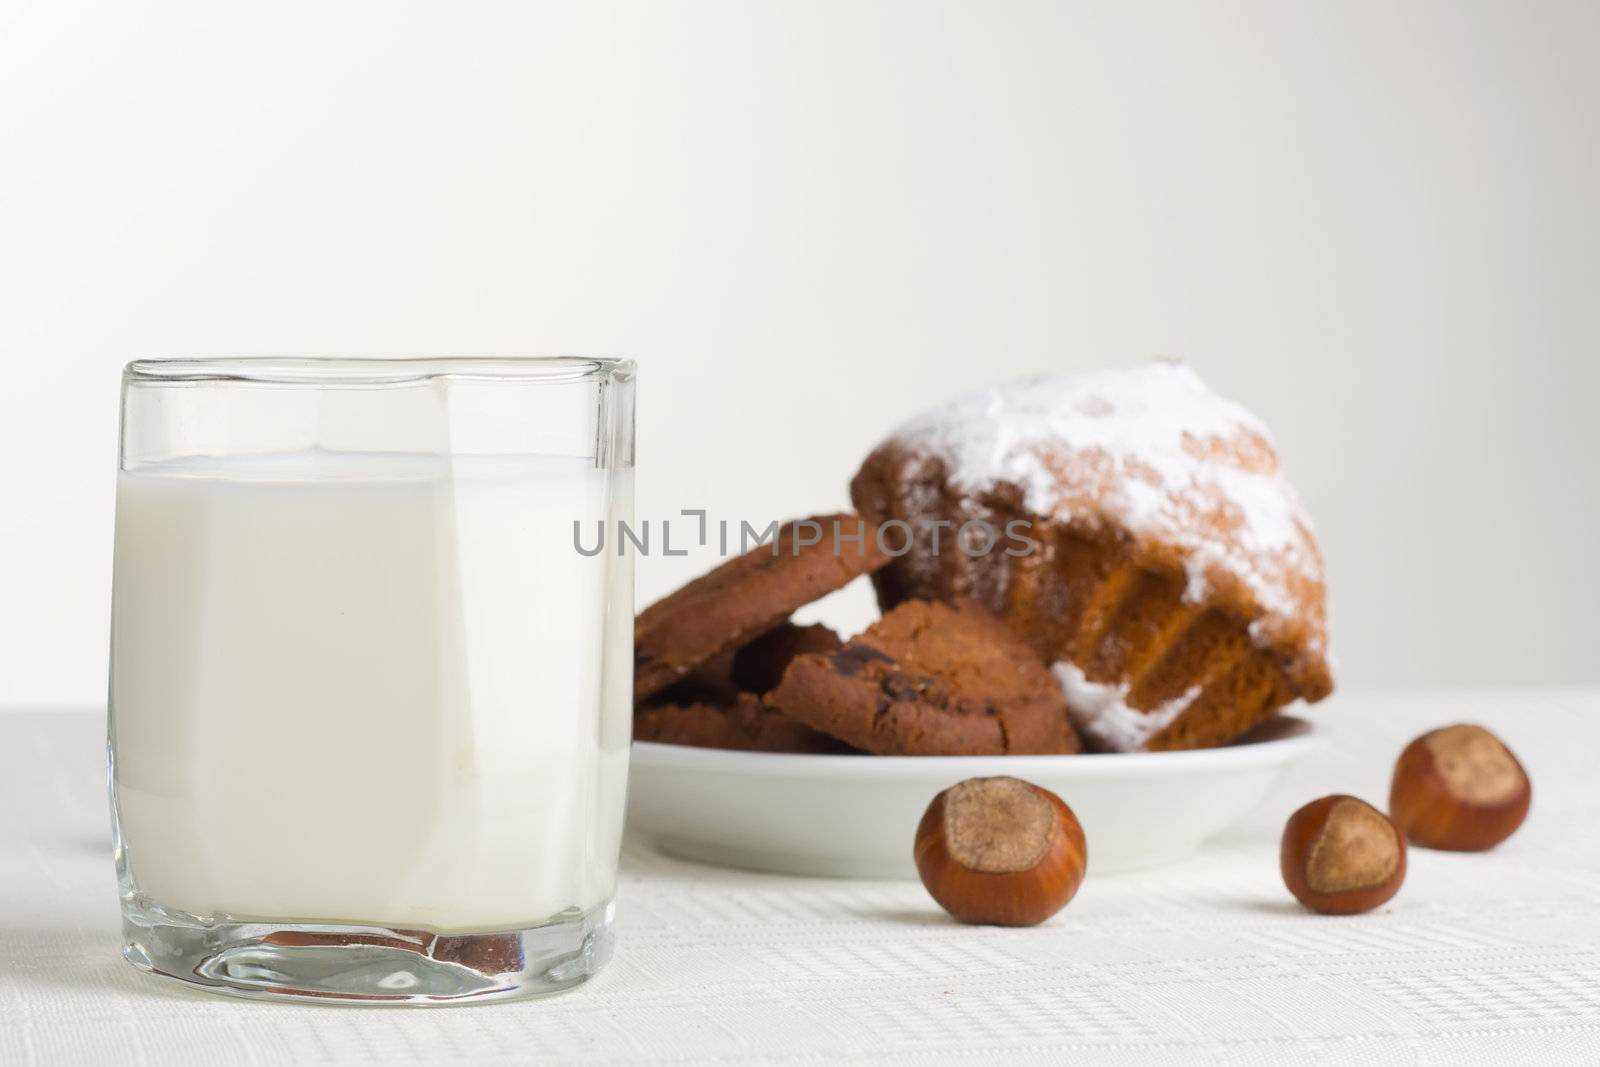 Milk and hazelnuts by Gdolgikh